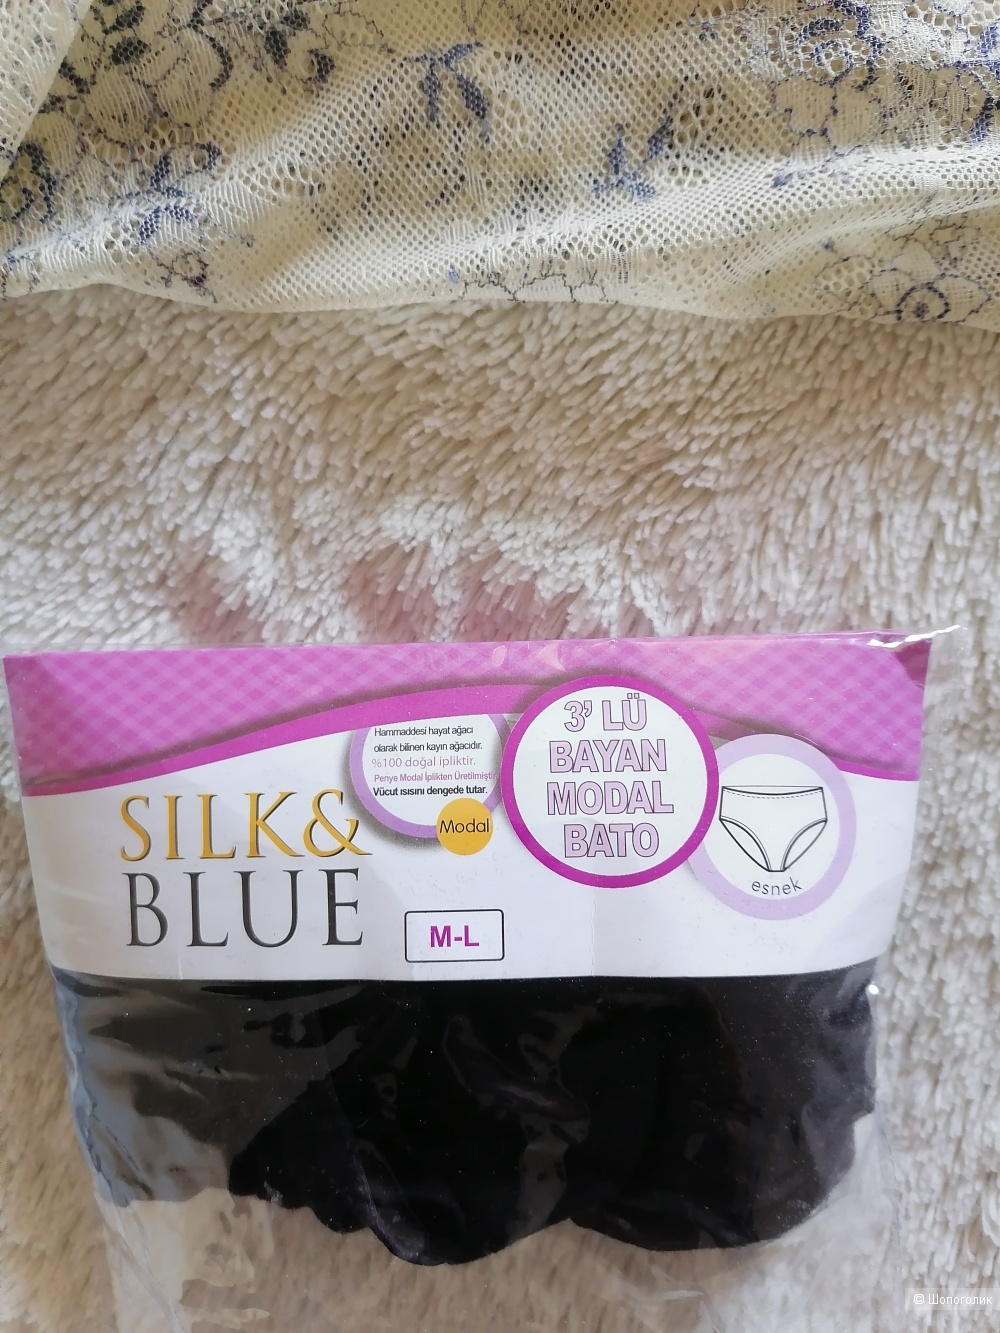 Комплект трусов Silk & blue, размер S, M.